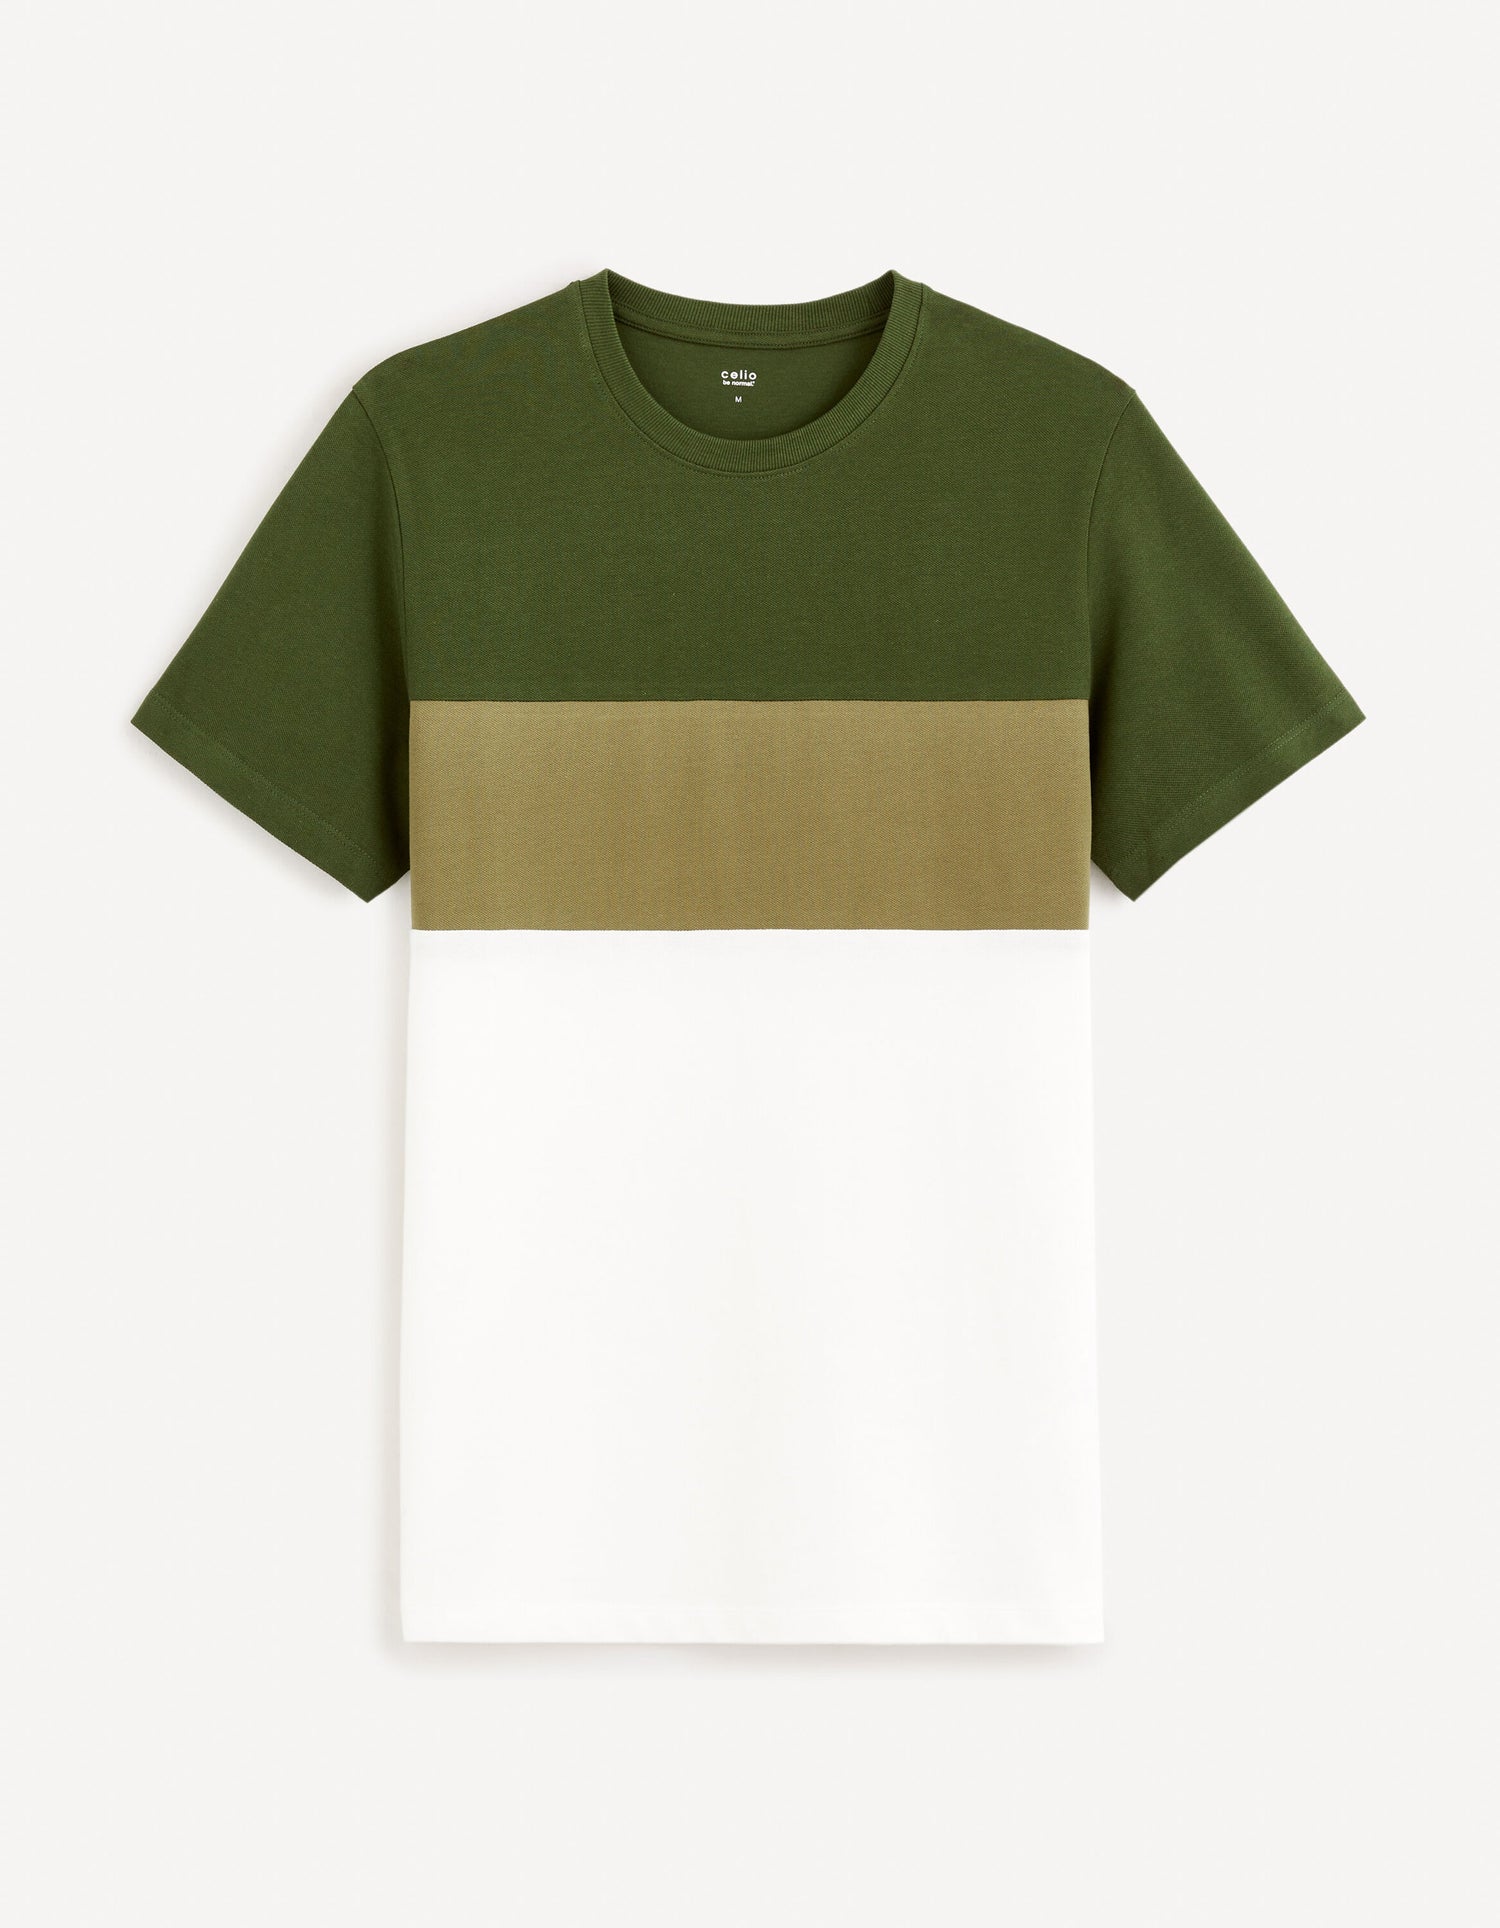 100% Cotton Round Neck T-Shirt - Khaki_FEBLOC_KHAKI GREEN_01